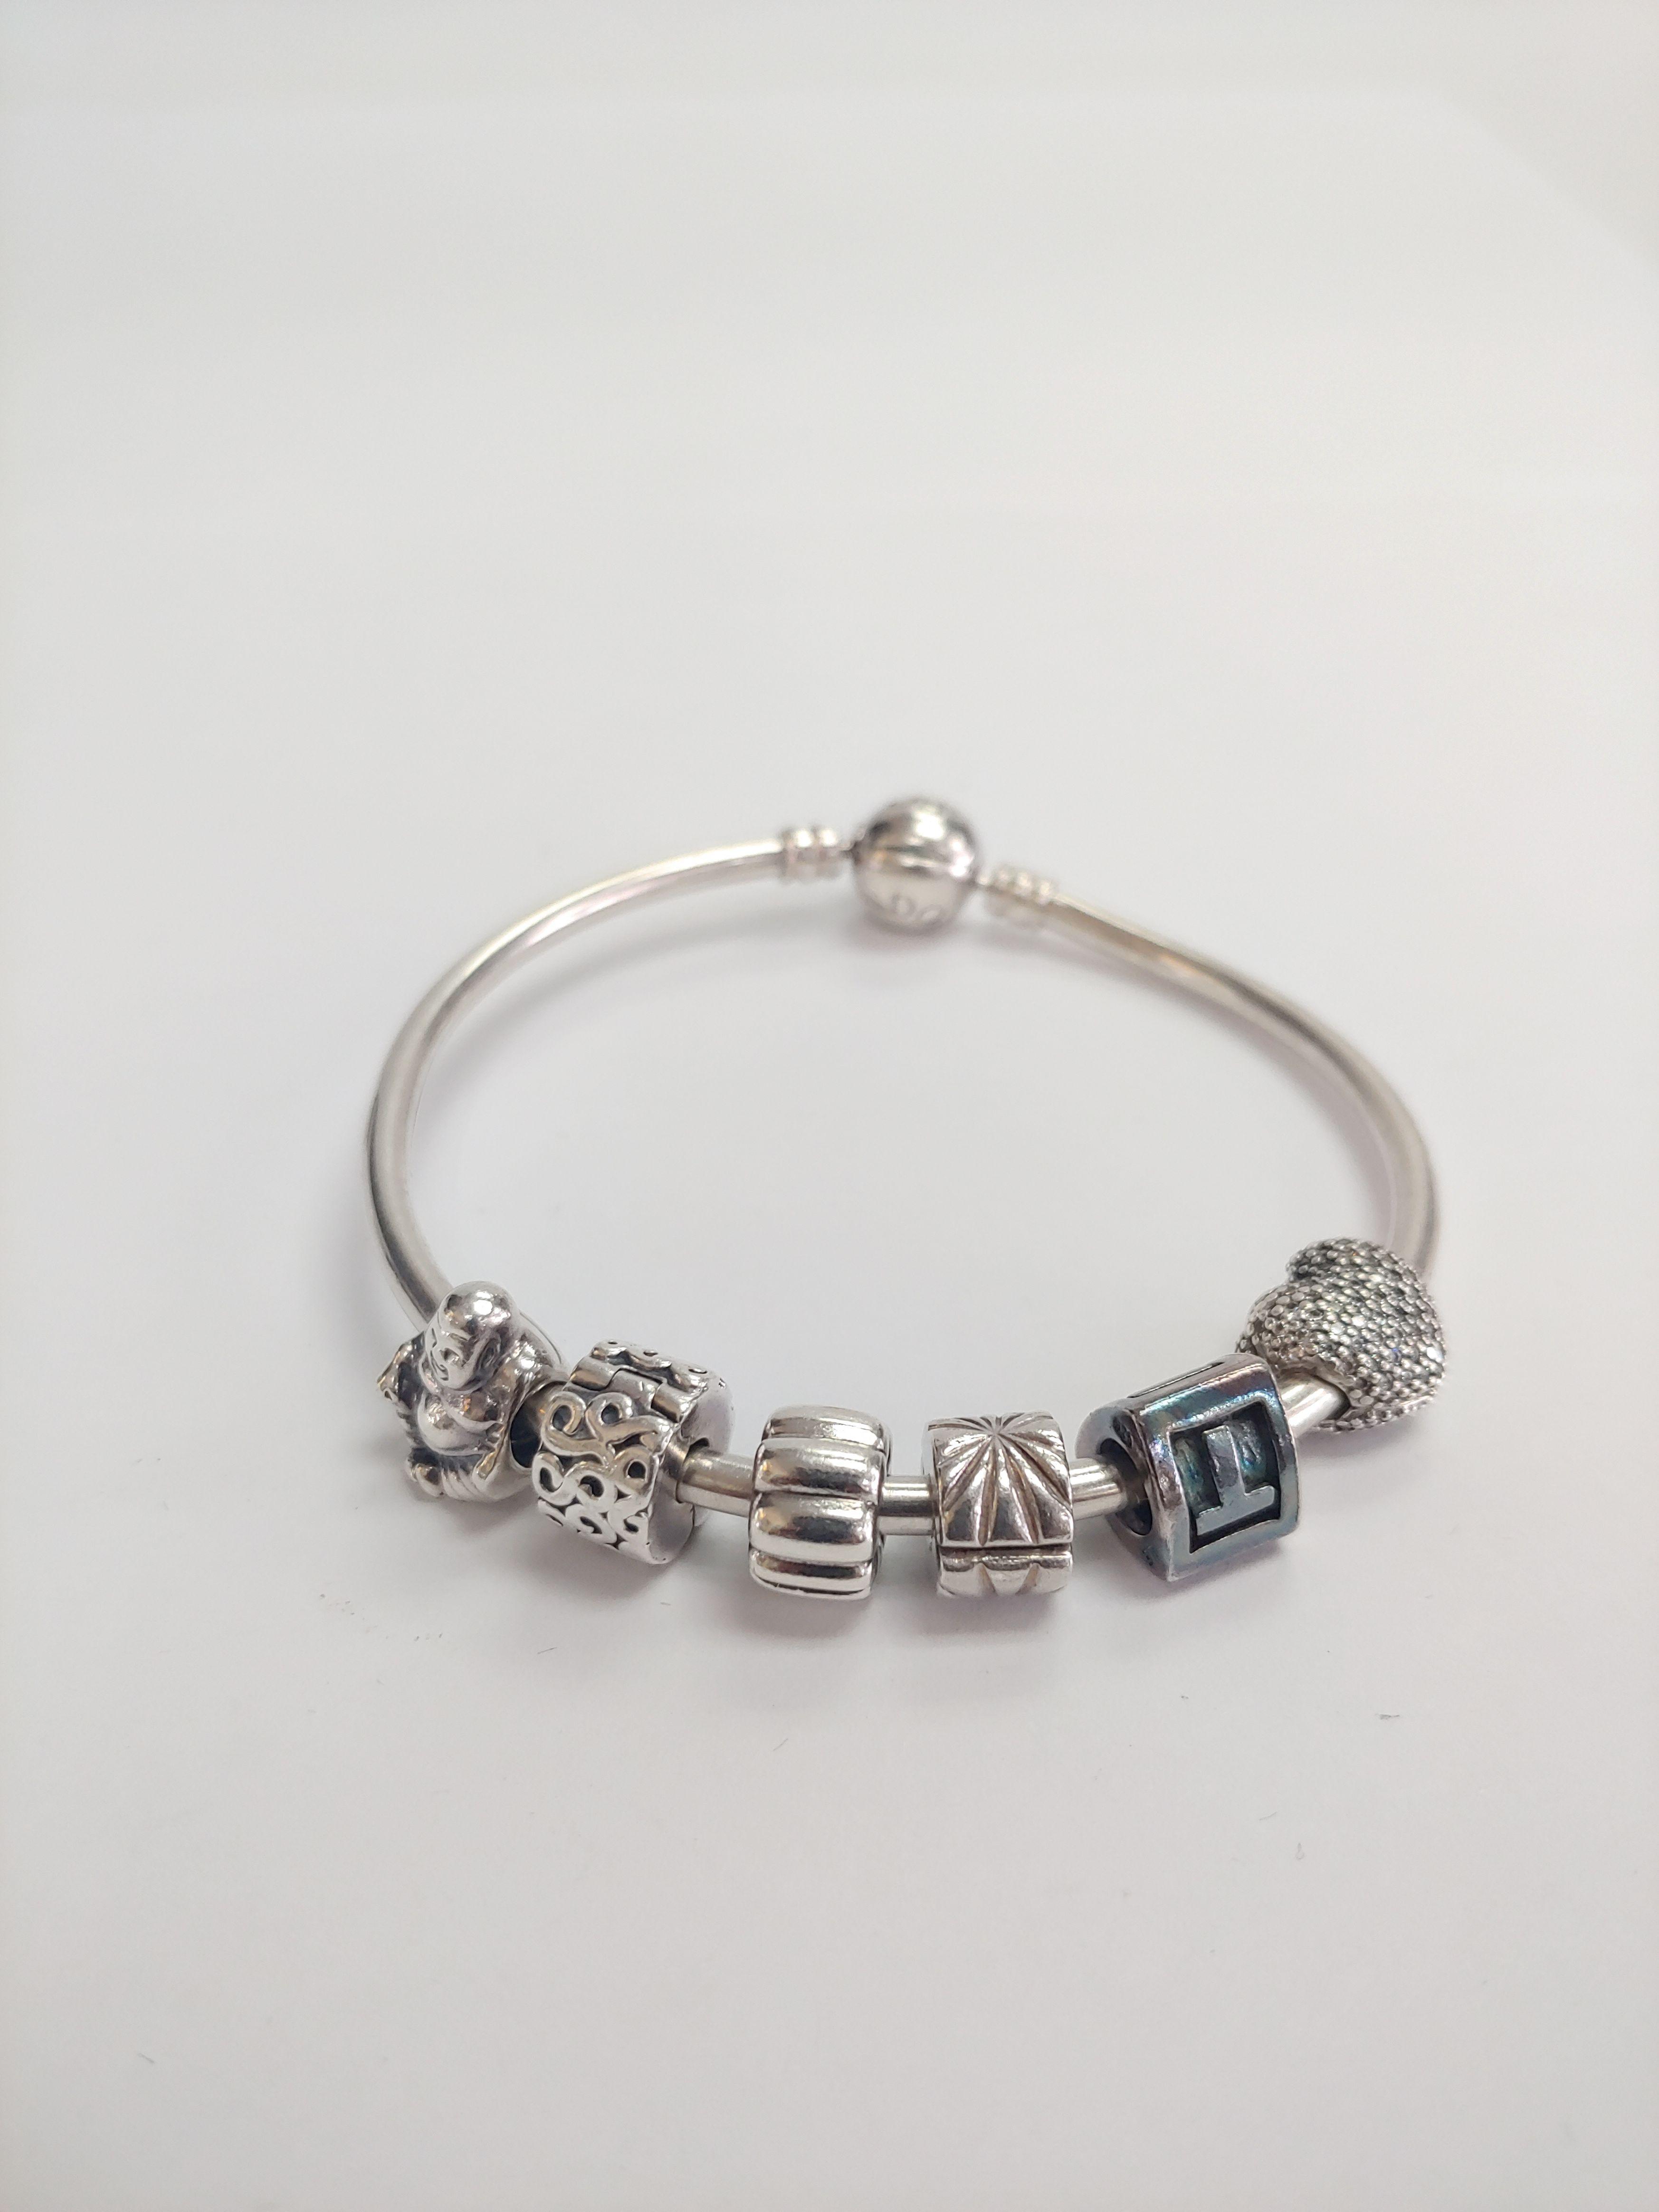 Designers Womens Pandora Bangle Bracelet with 6 Charm Charms and Box